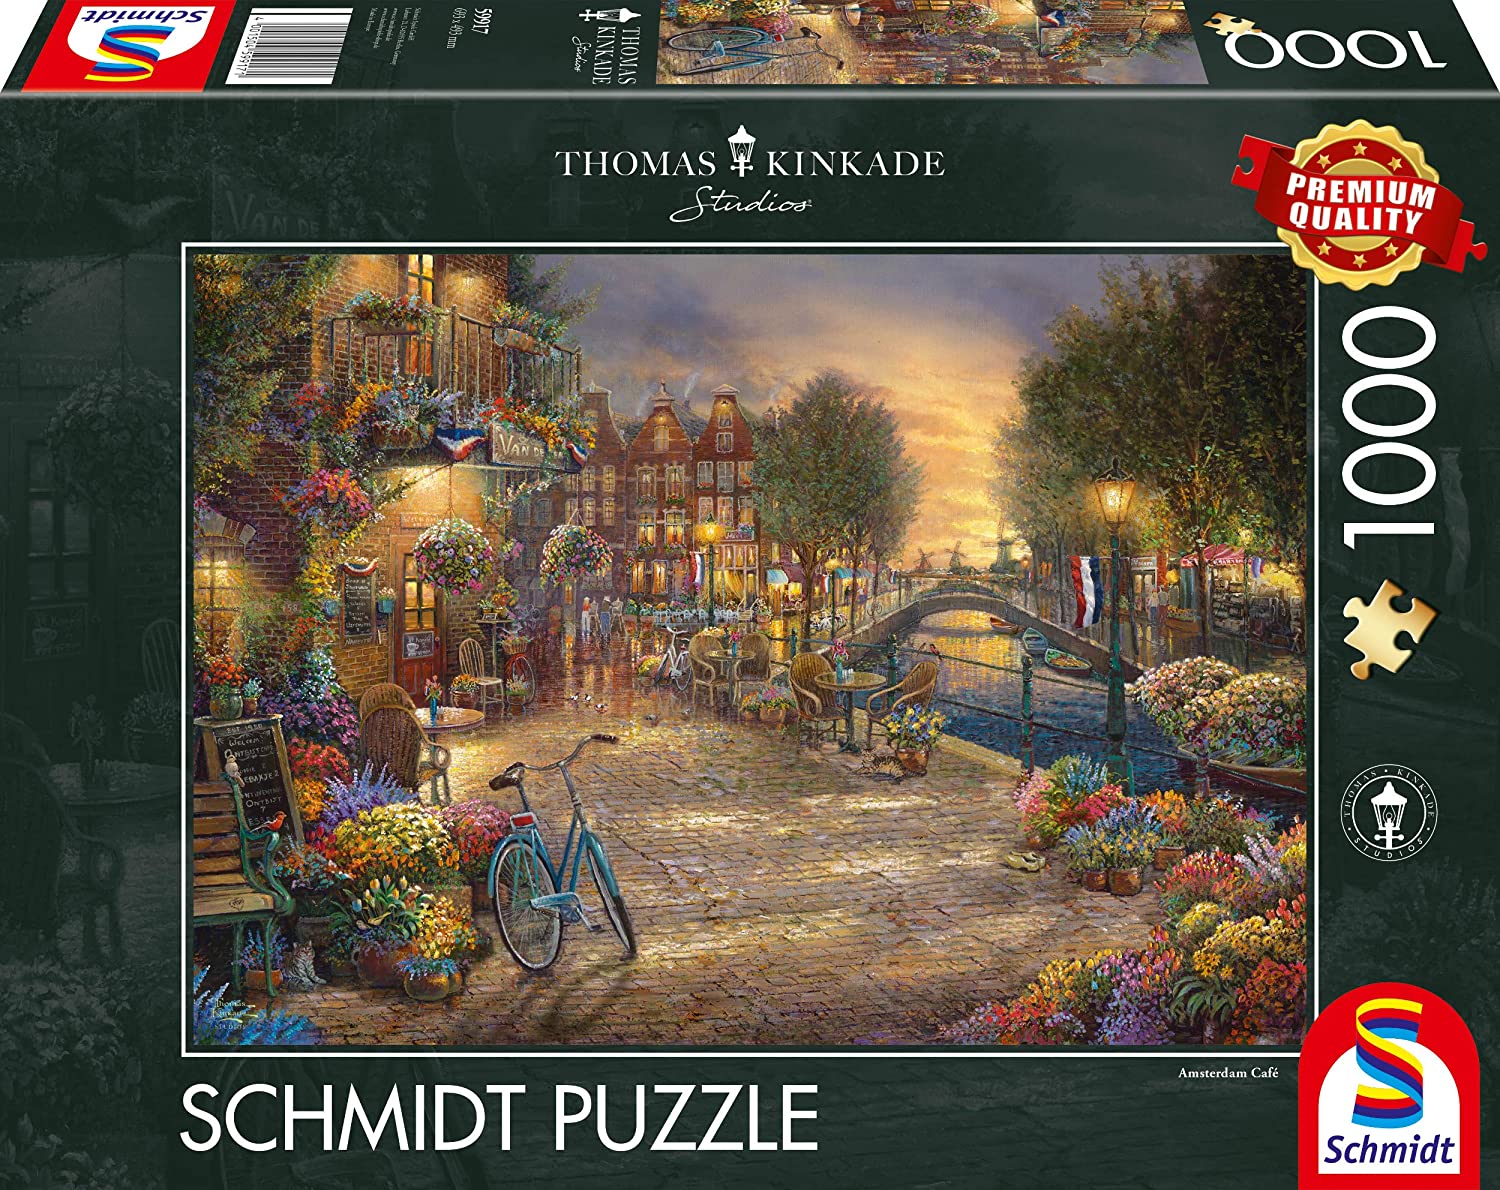 P.P HAMMER AMIGA Platform Game Rare Box Artwork Jigsaw Puzzle #687 